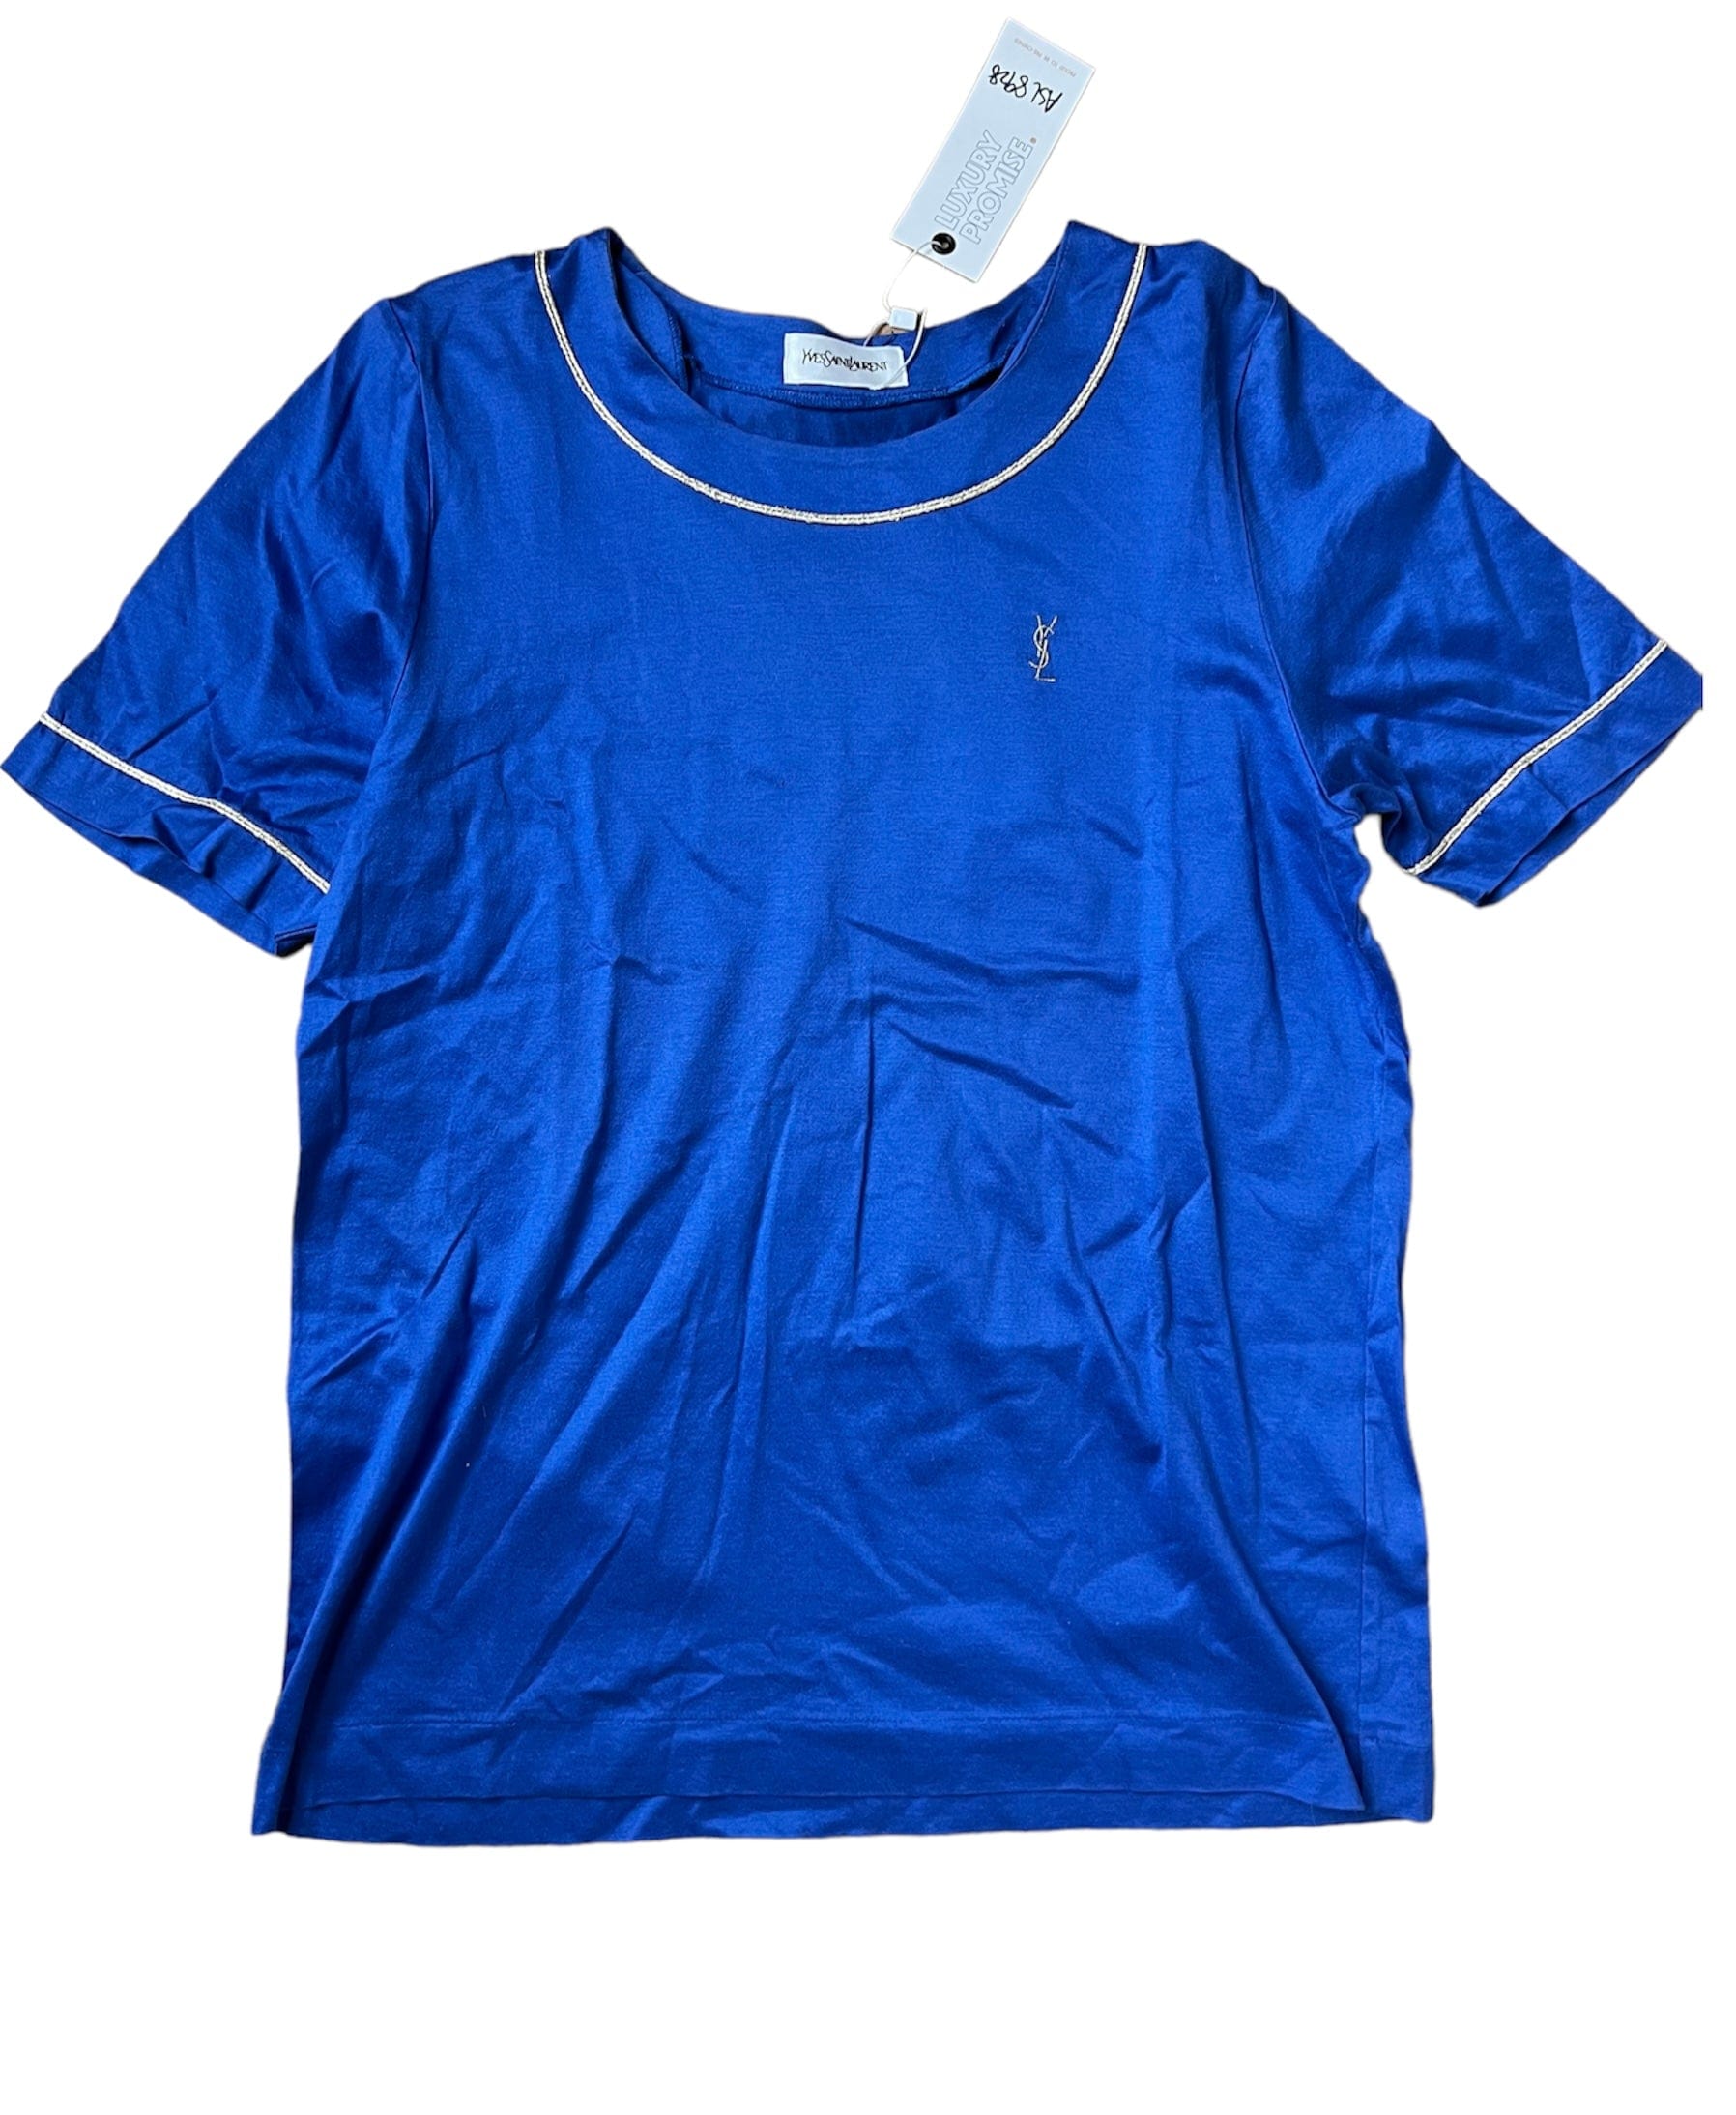 Yves Saint Laurent YSL Logo T-Shirt Blue Gold ASL8928